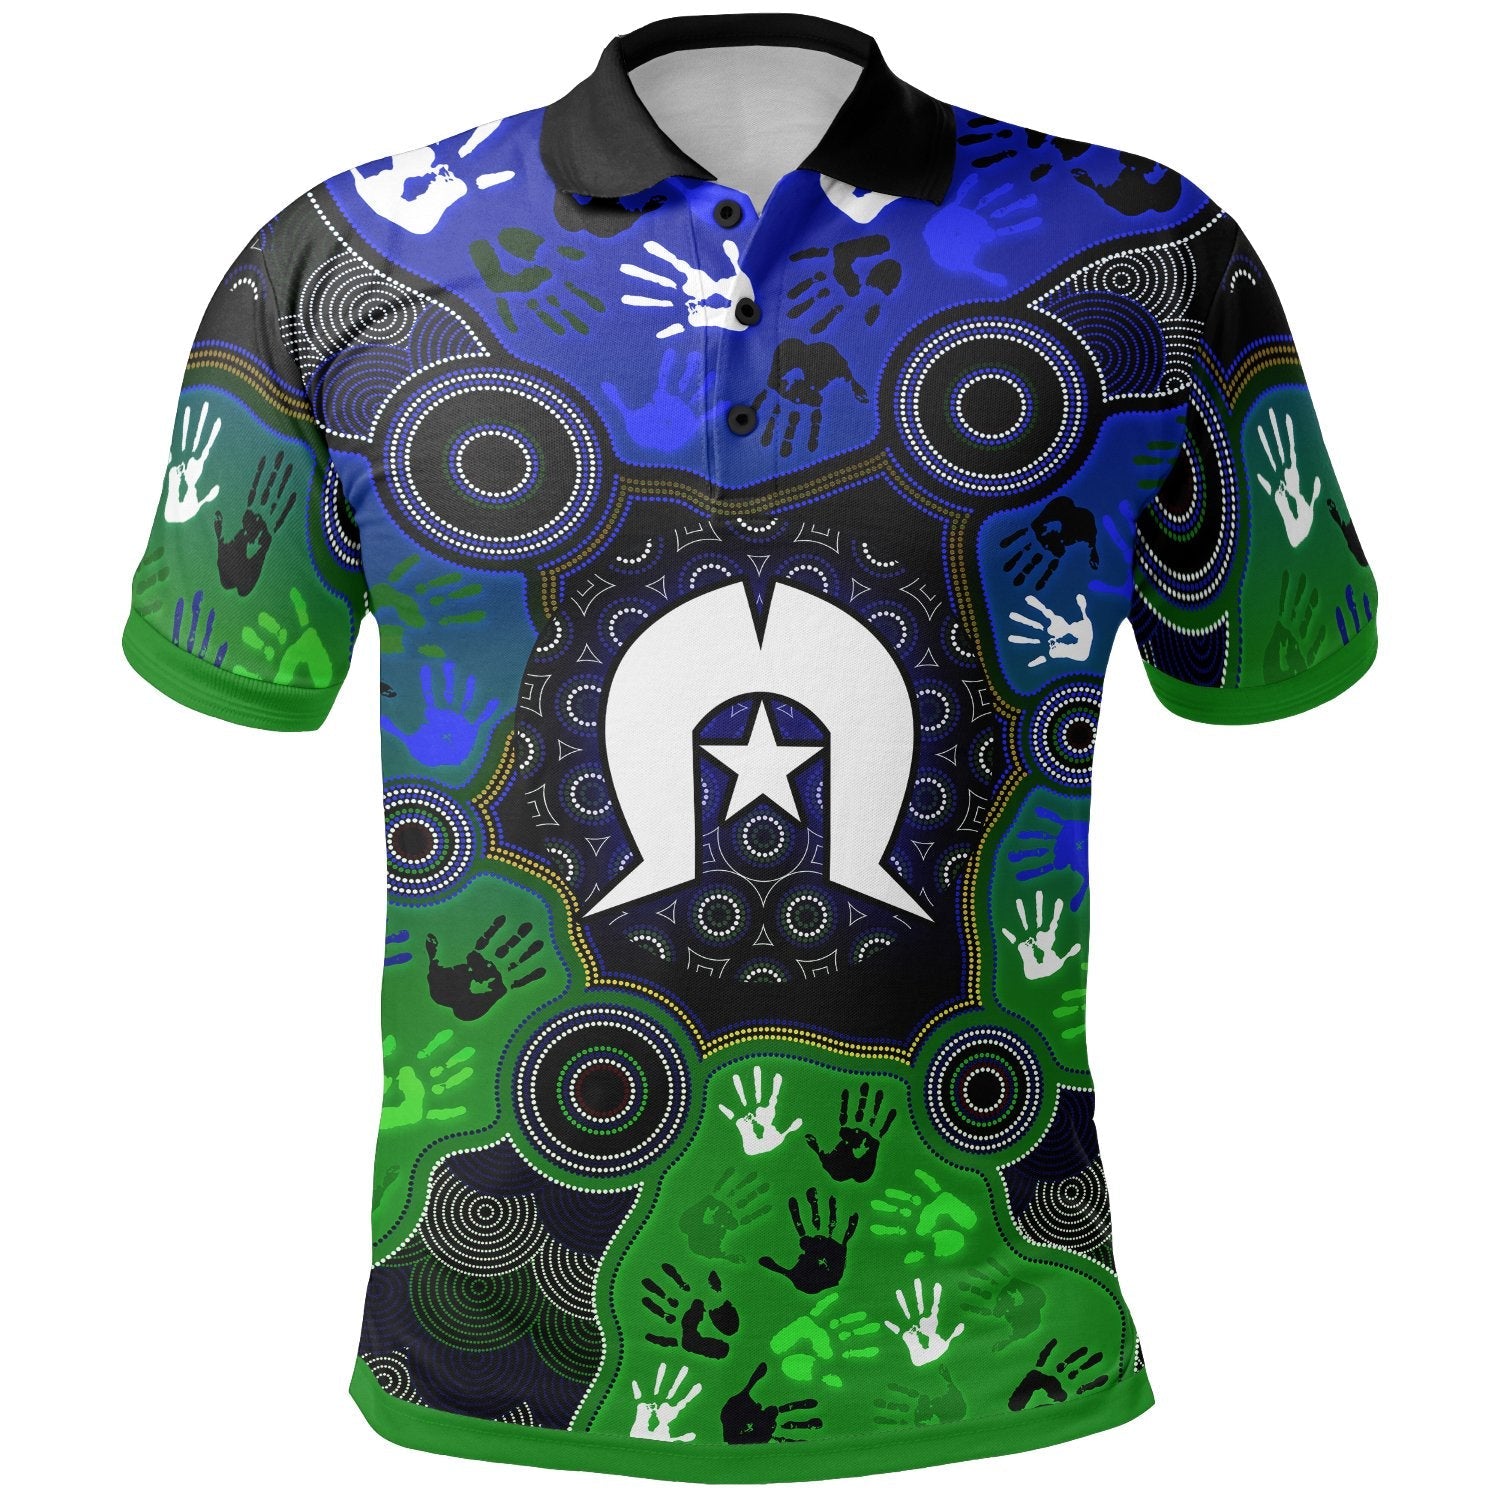 aboriginal-polo-shirt-torres-strait-symbol-with-indigenous-patterns